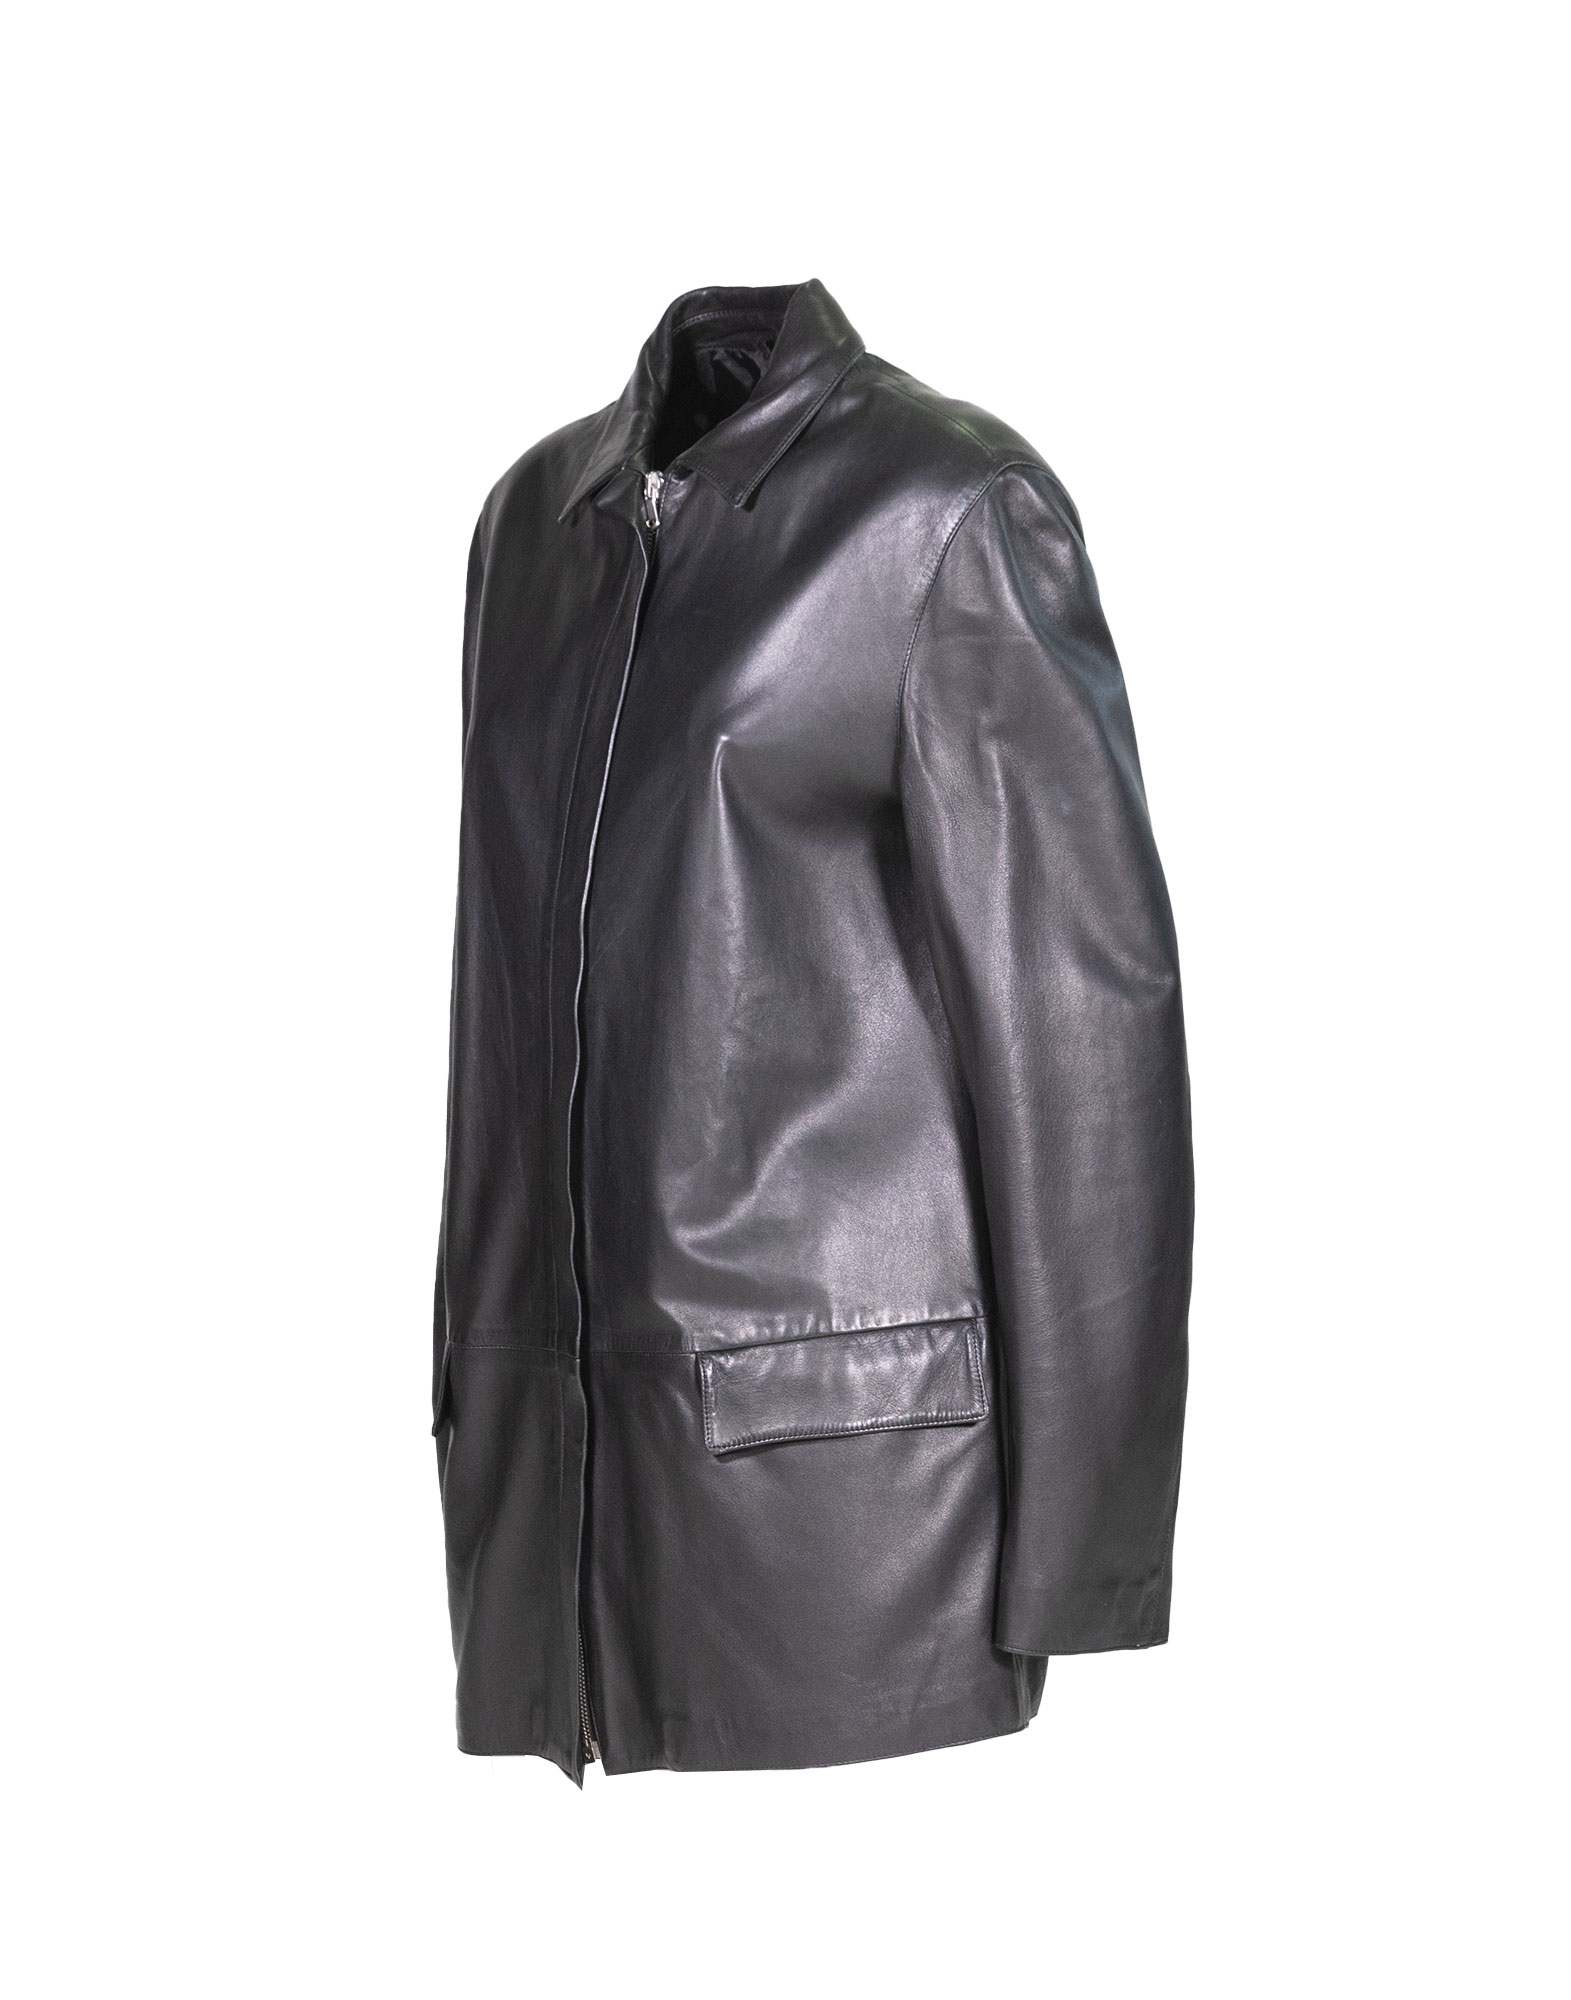 JOOP! - Woman leather jacket